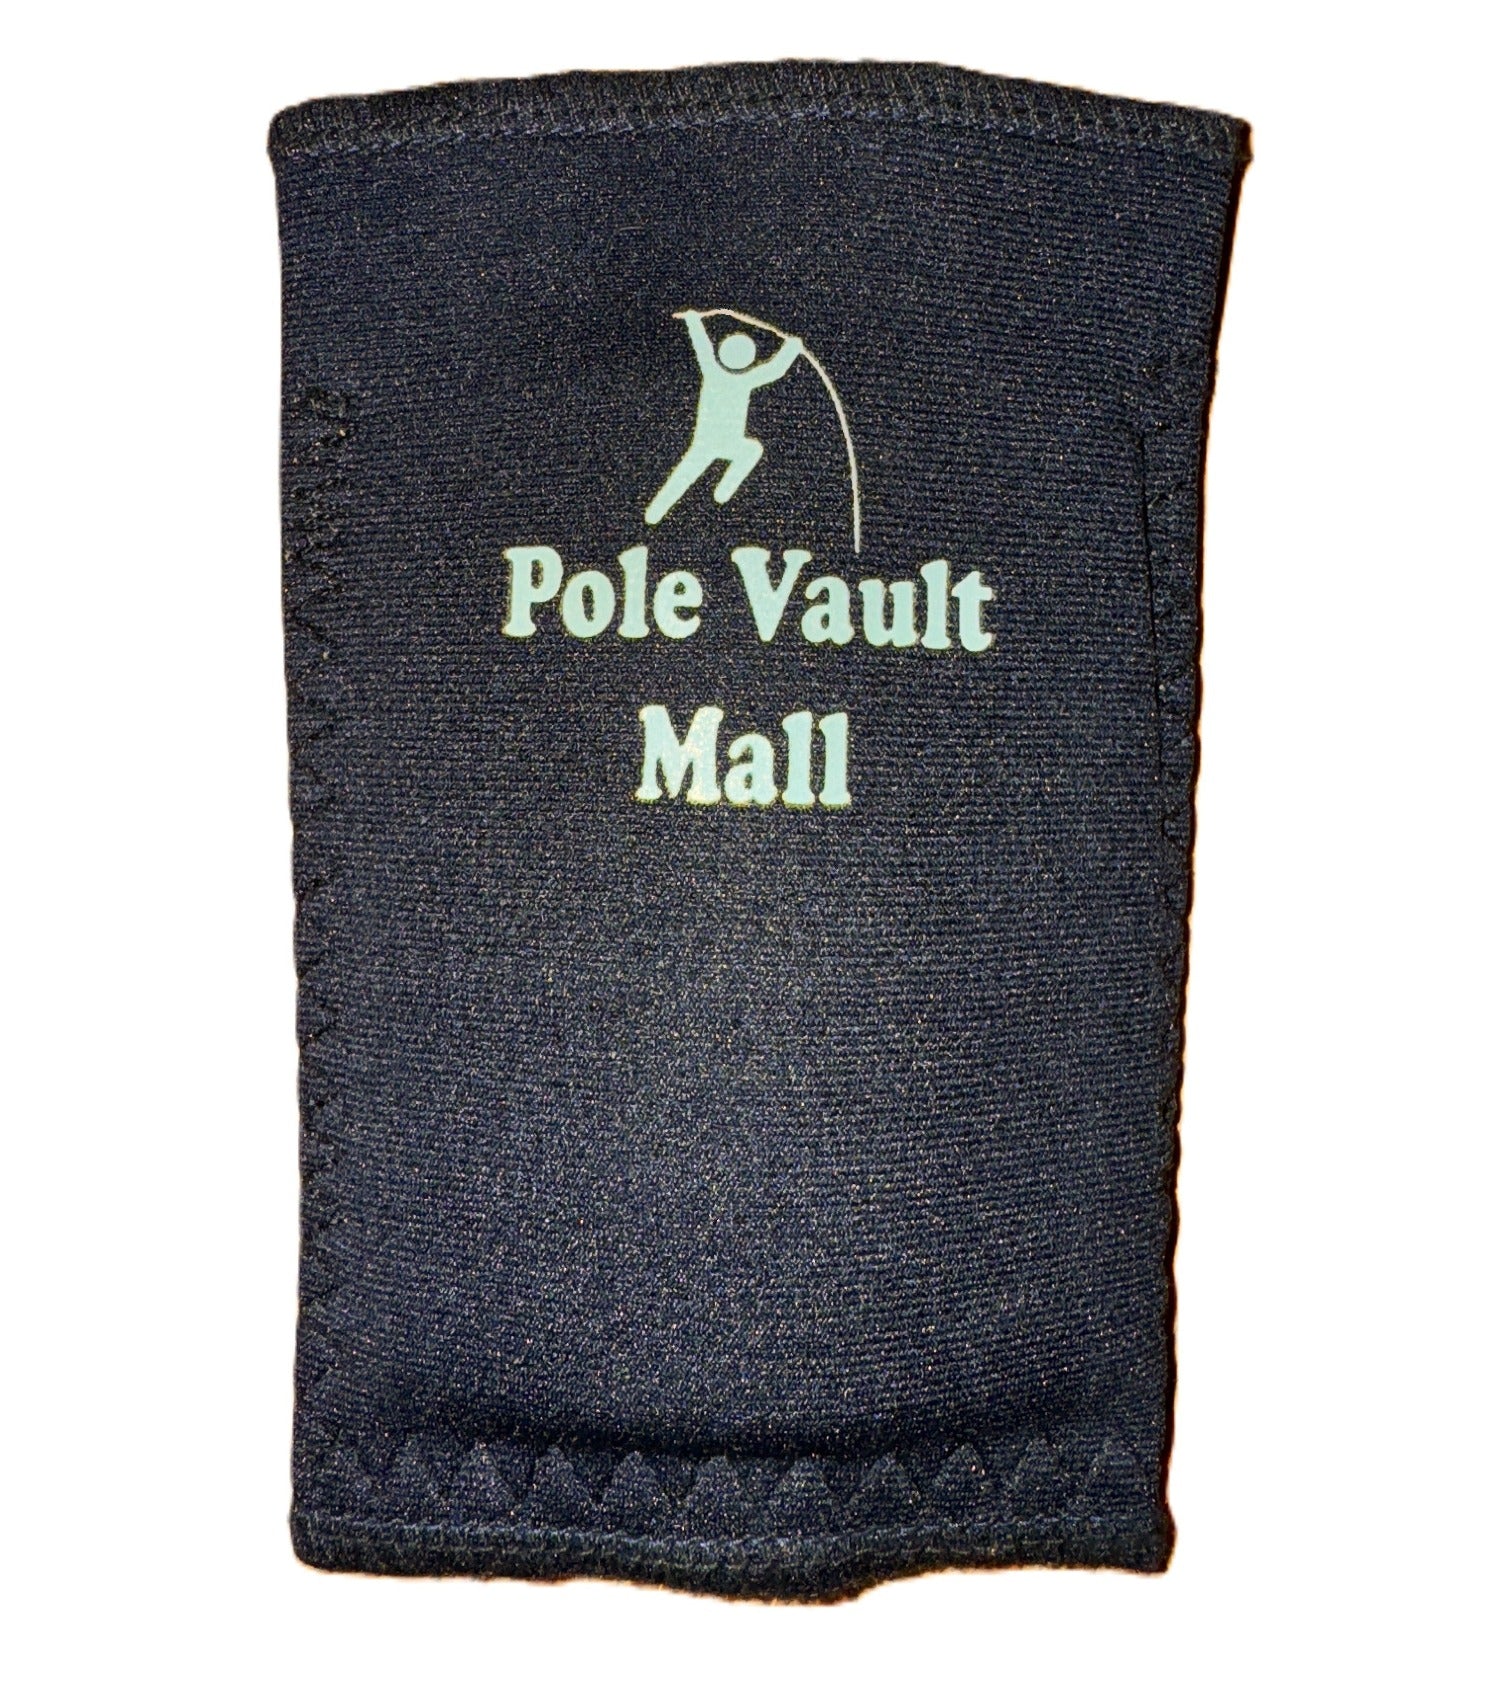 Pacer Pole Vault Poles – Pole Vault Mall